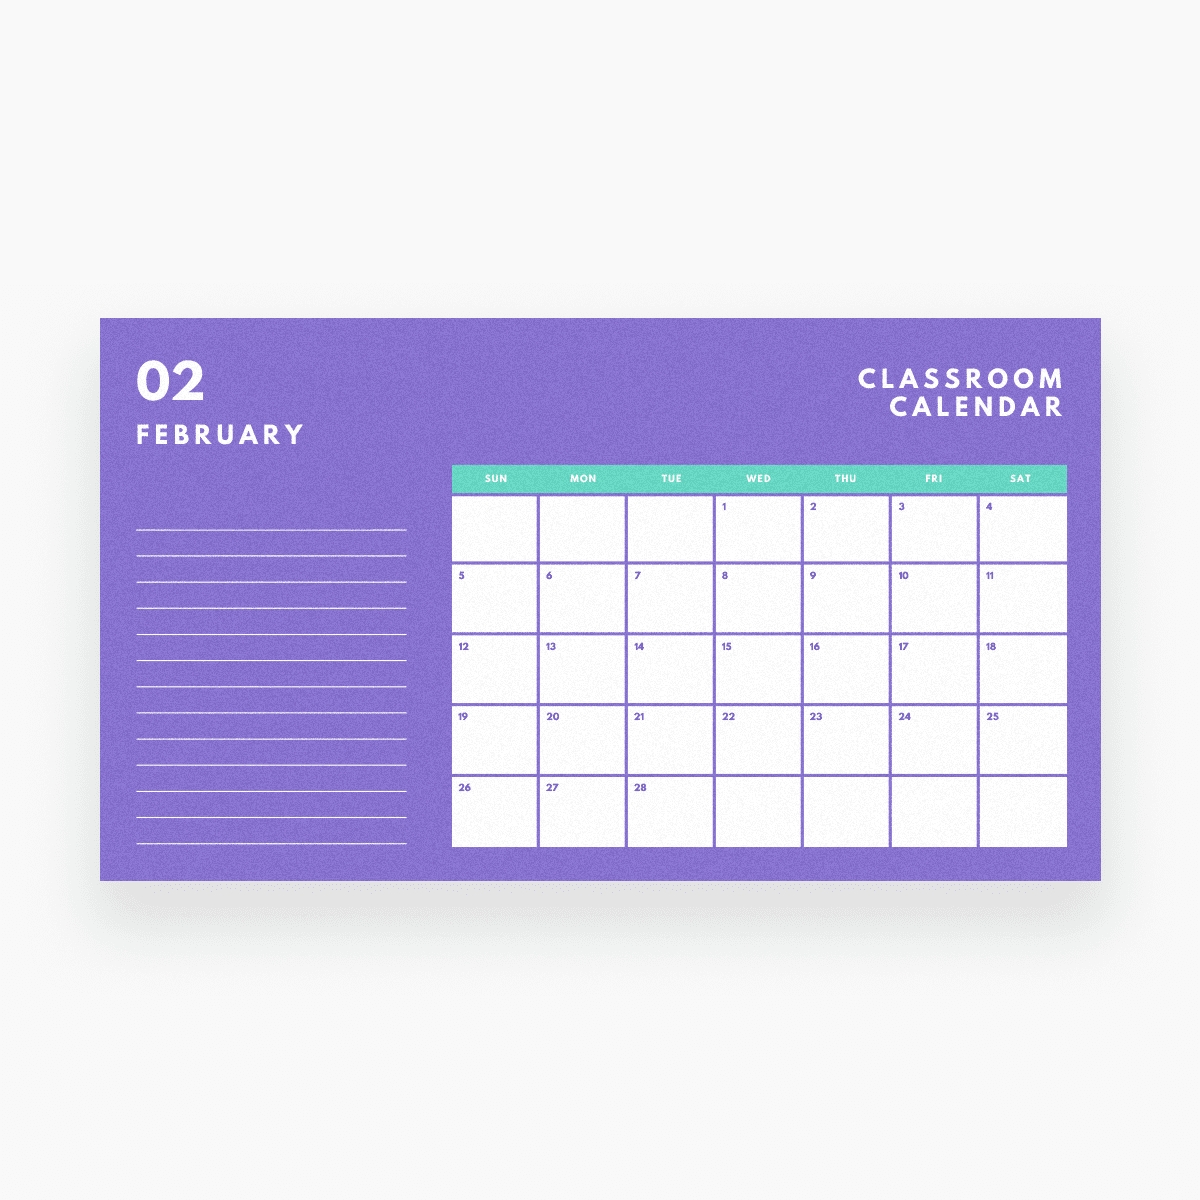 free online calendar maker: design a custom calendar canva